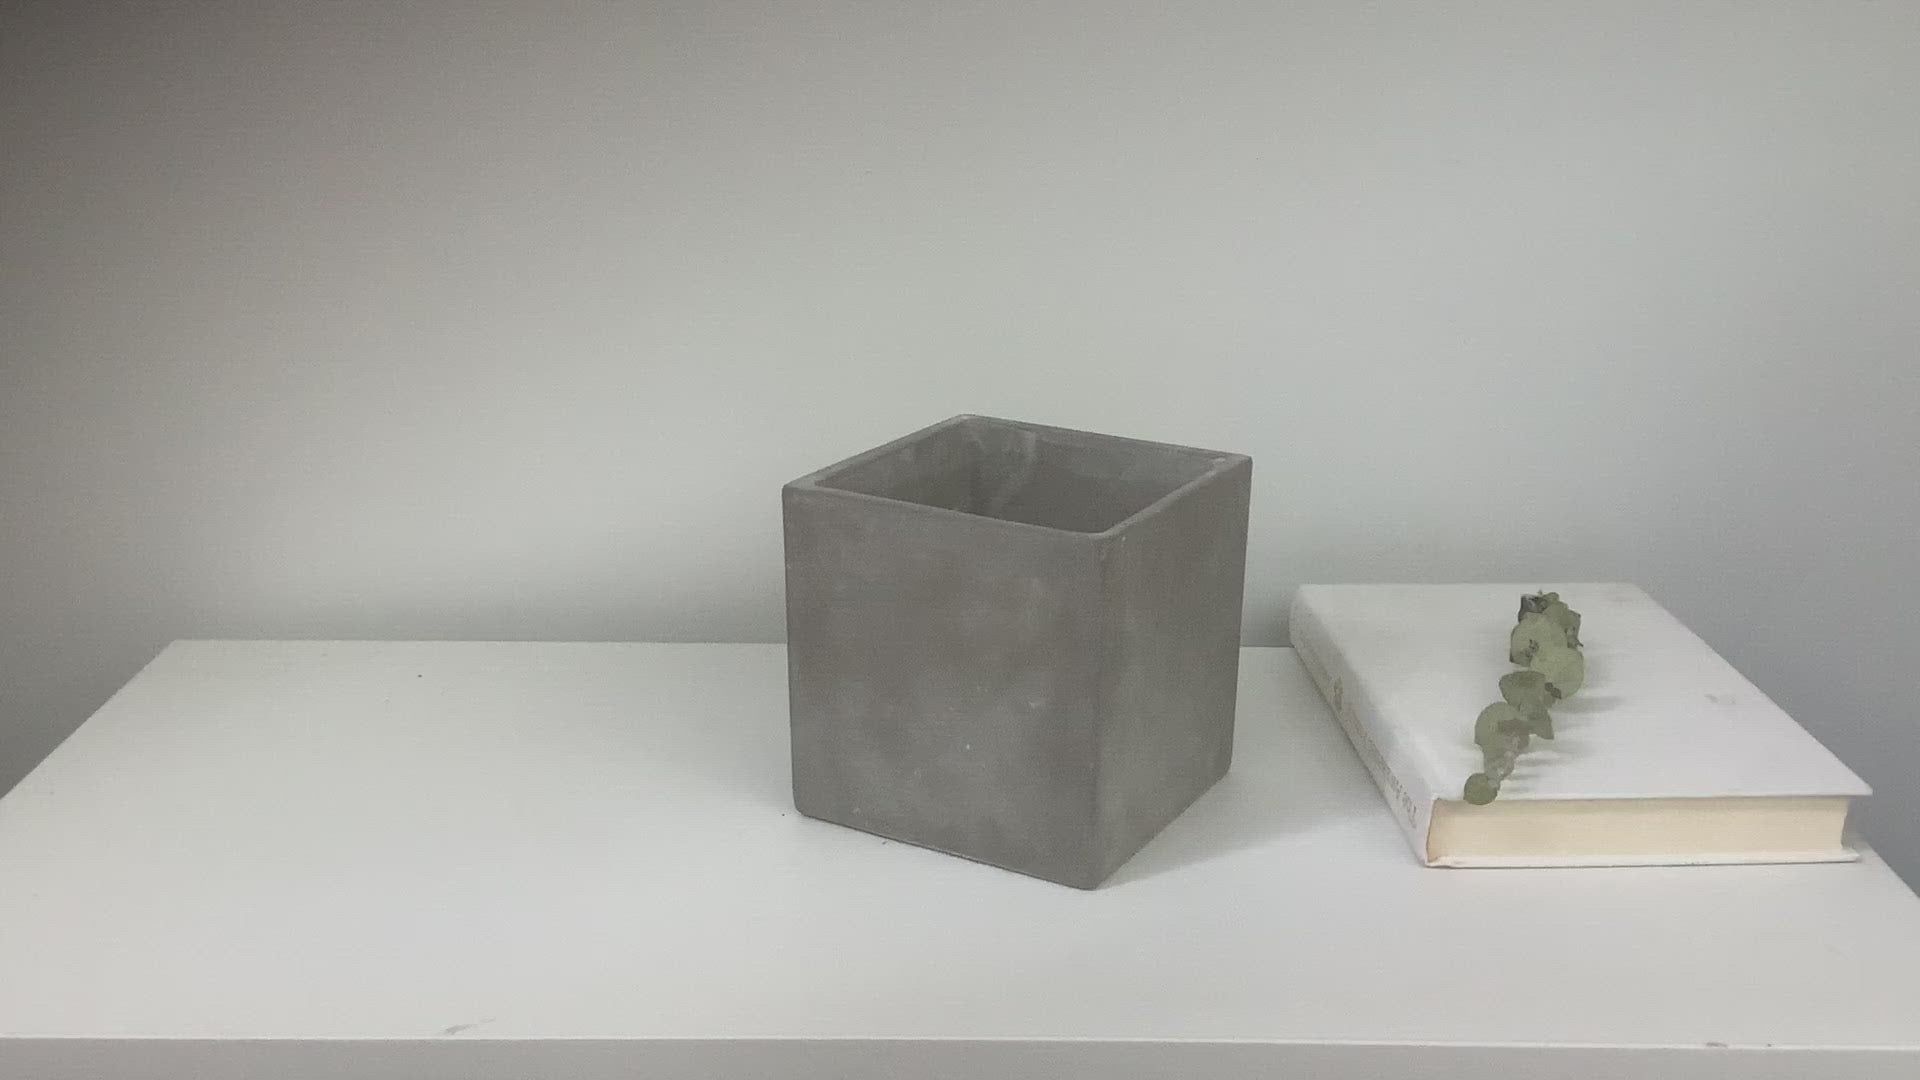 Concrete Cement Square Cube Planter Pot - 3" to 8"